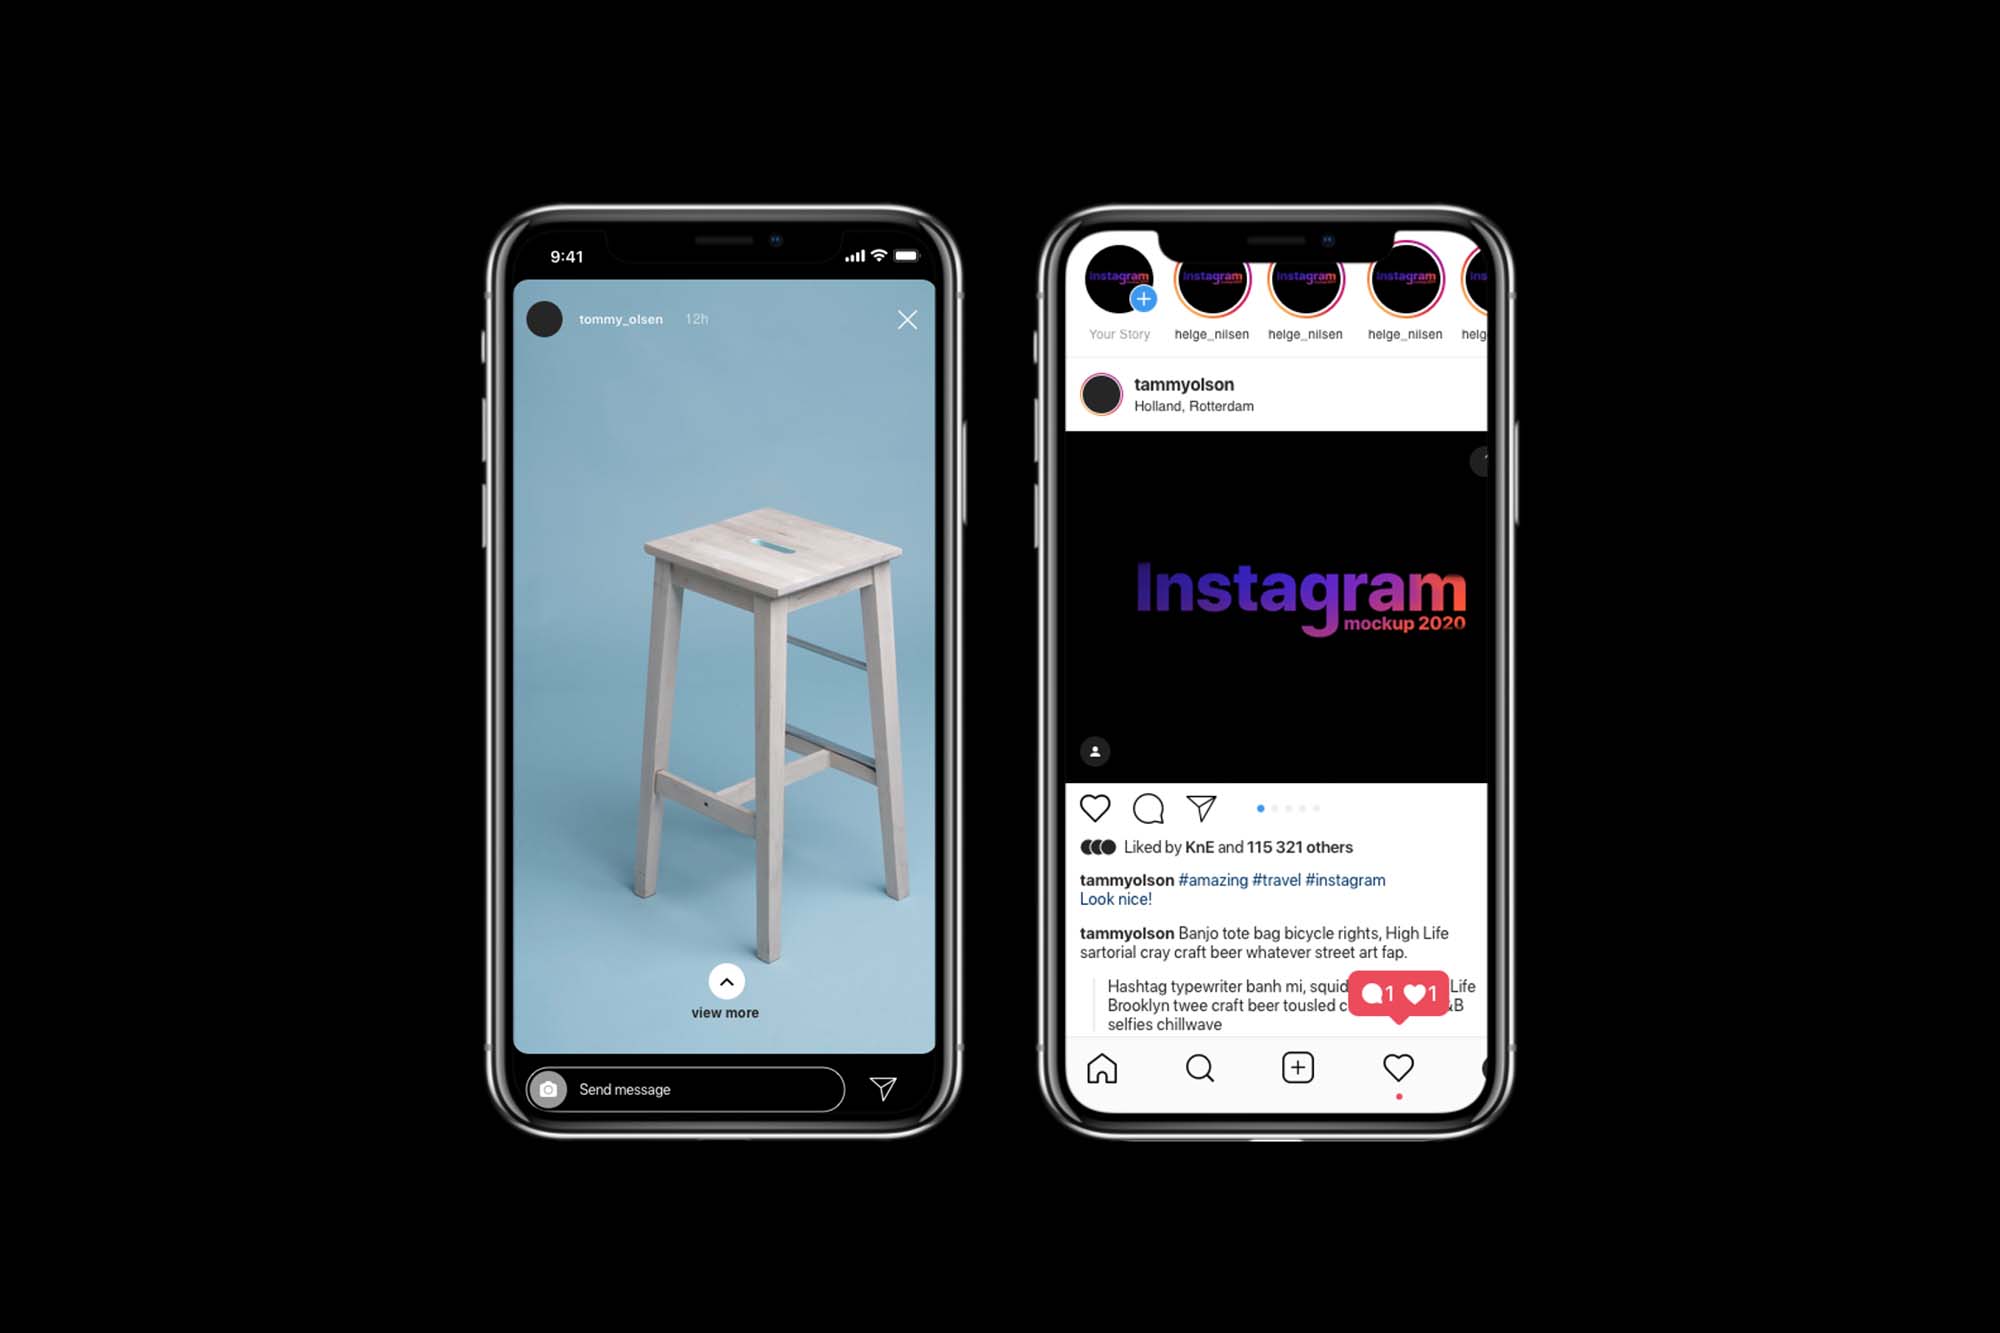 Download Instagram Mockup 2020 PSD, Sketch, Figma (Free) by Code Market